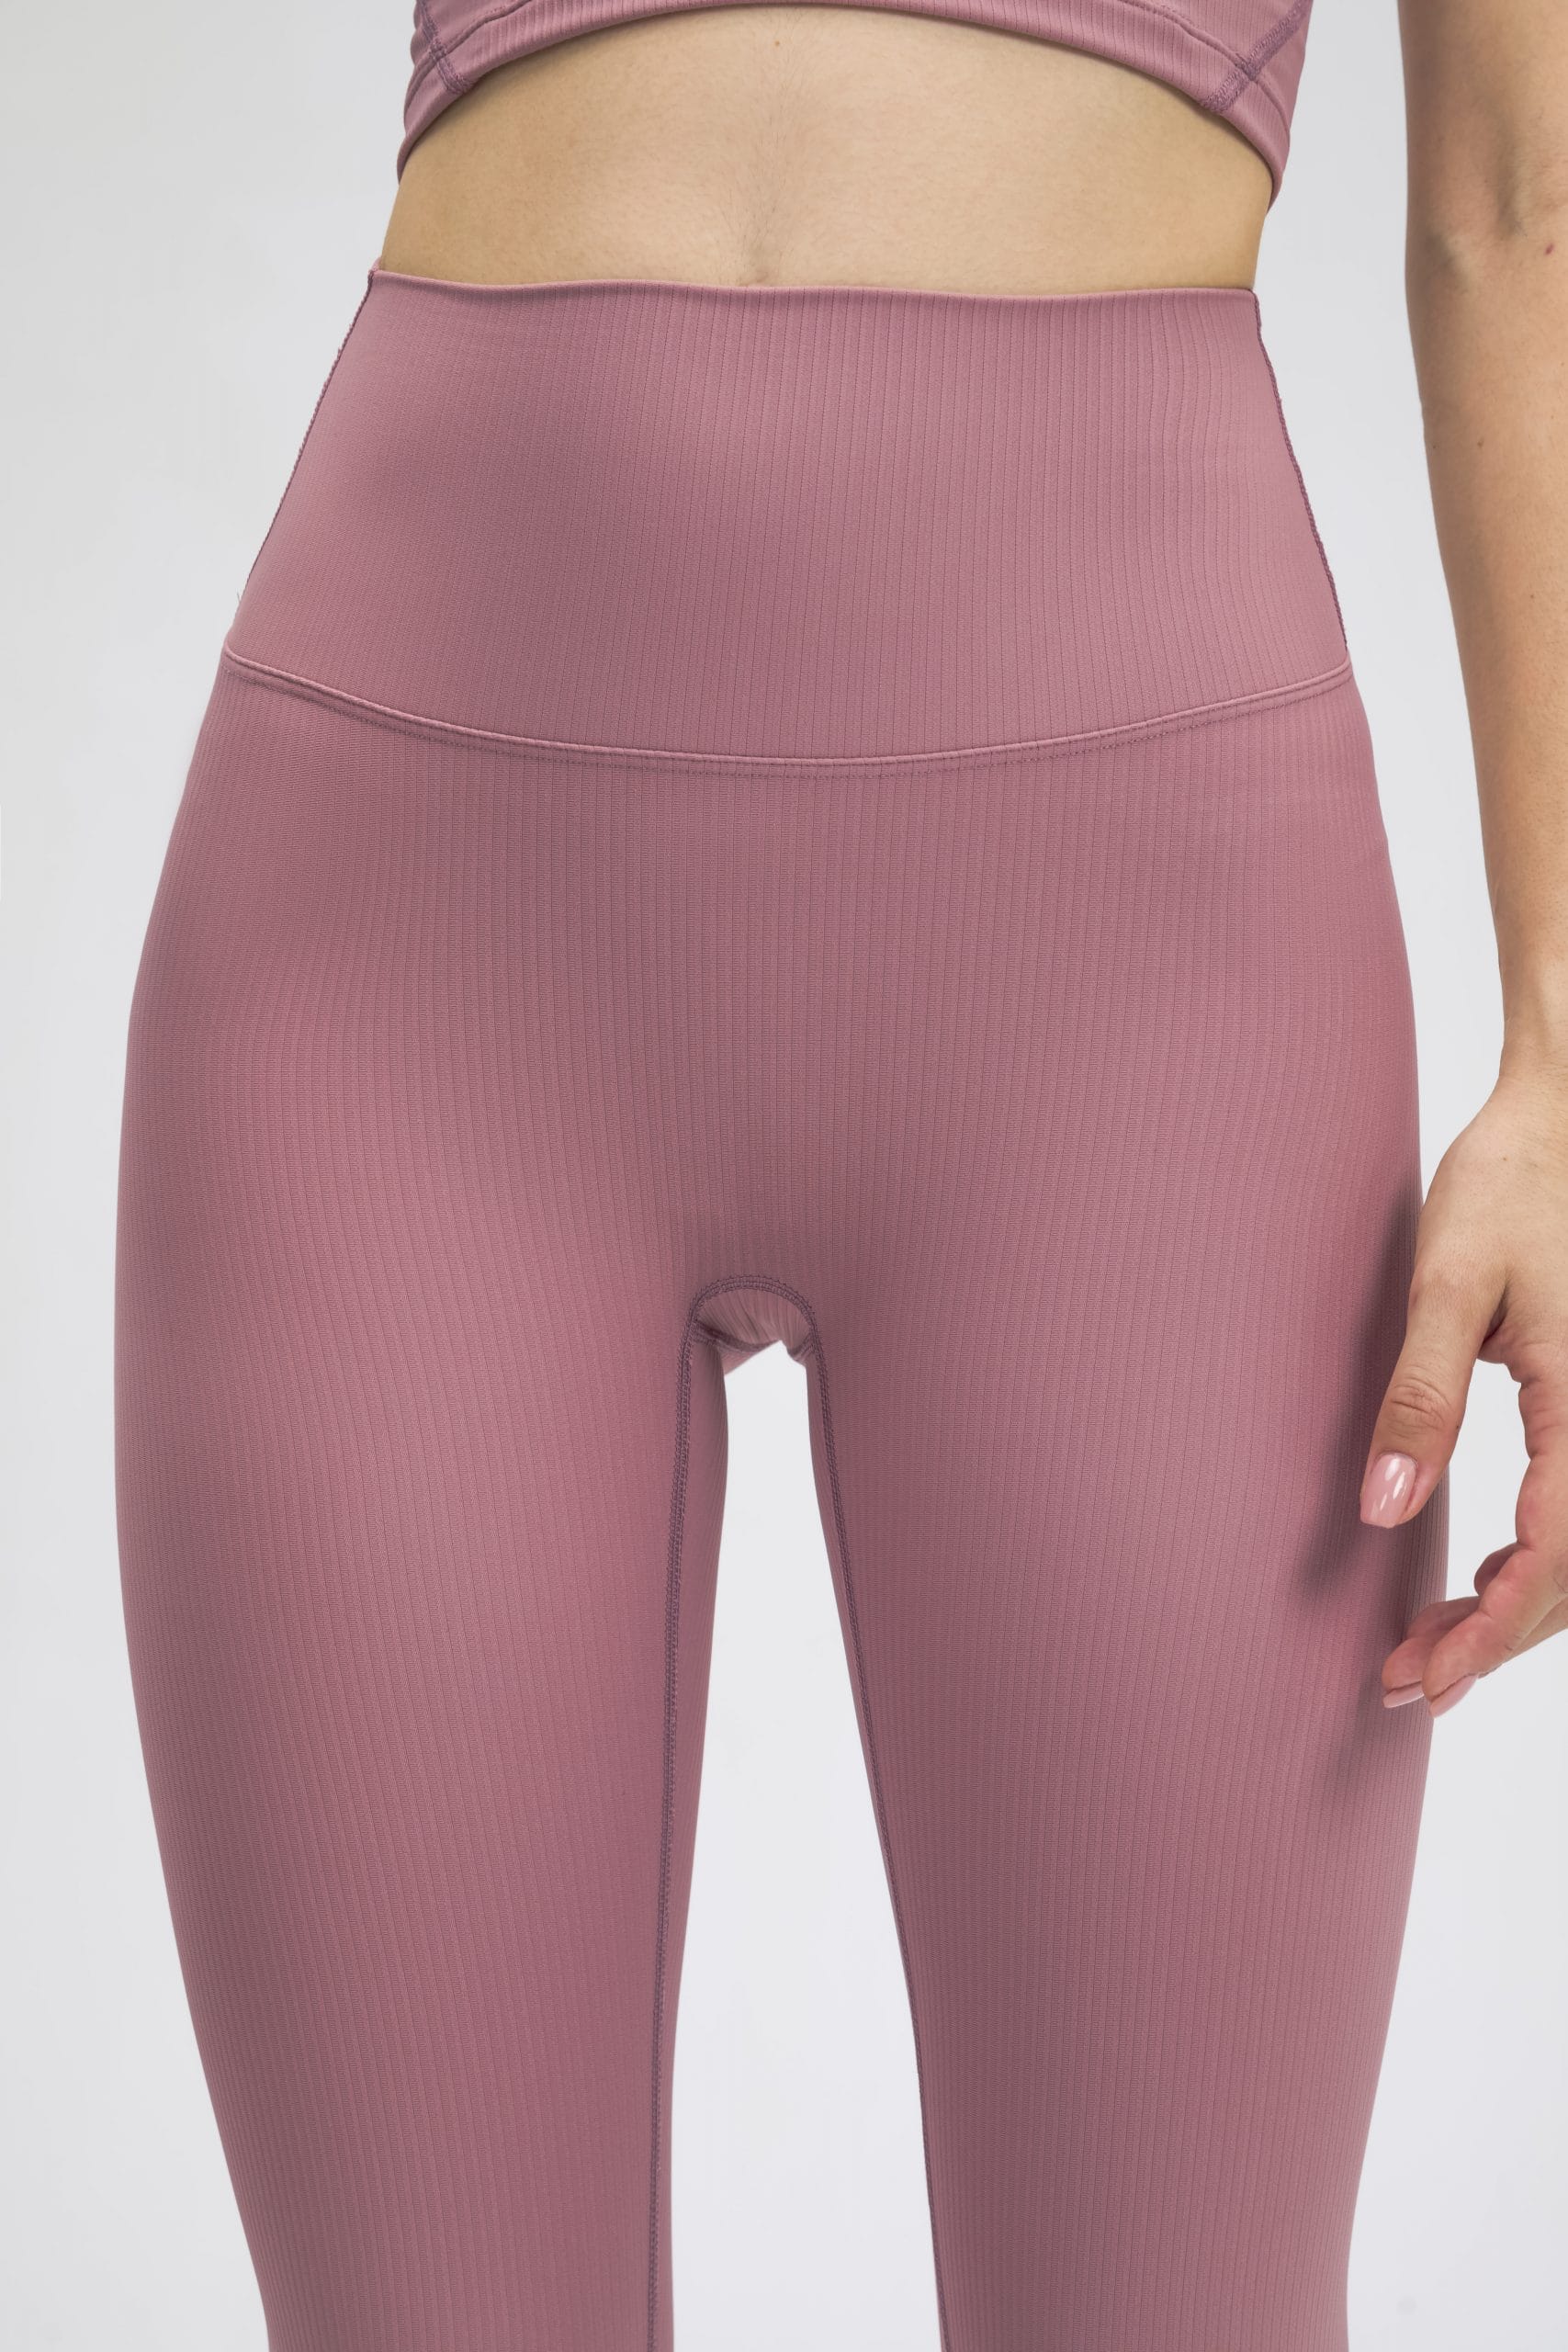 Tight Yoga Pants Womens Wholesale - China Fitness Clothing